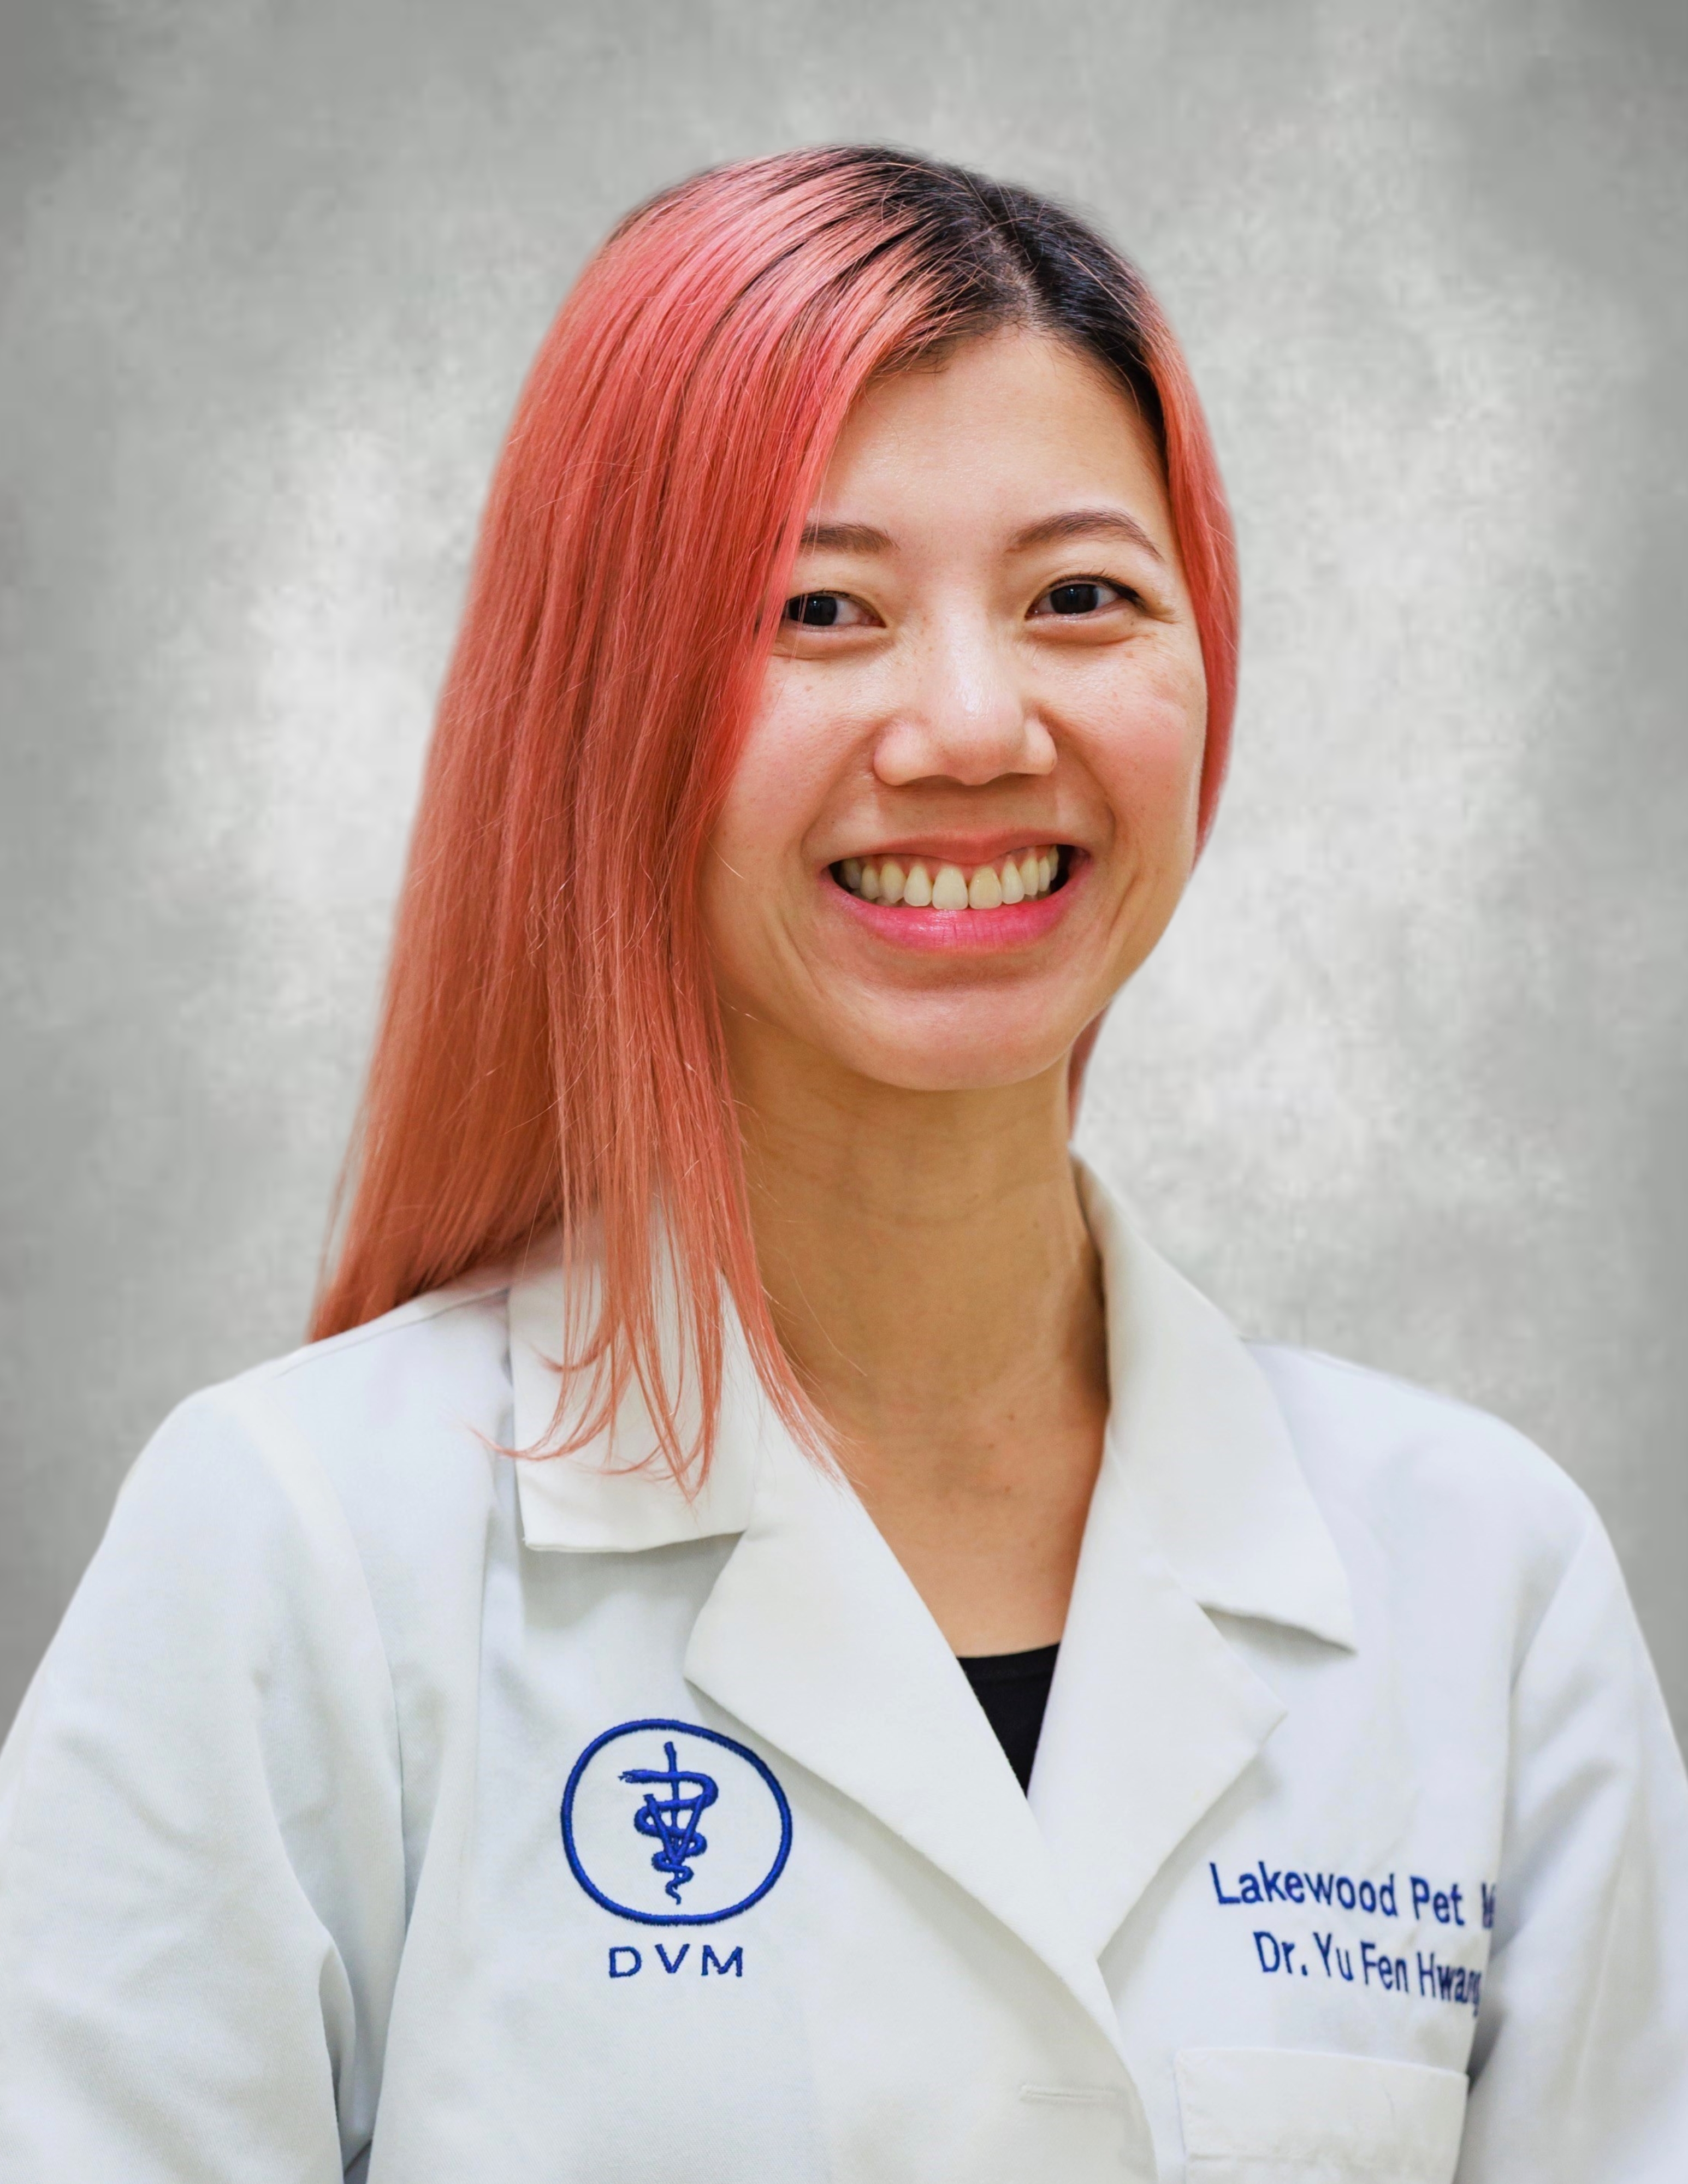 Dr. Jen smiling in her lab coat